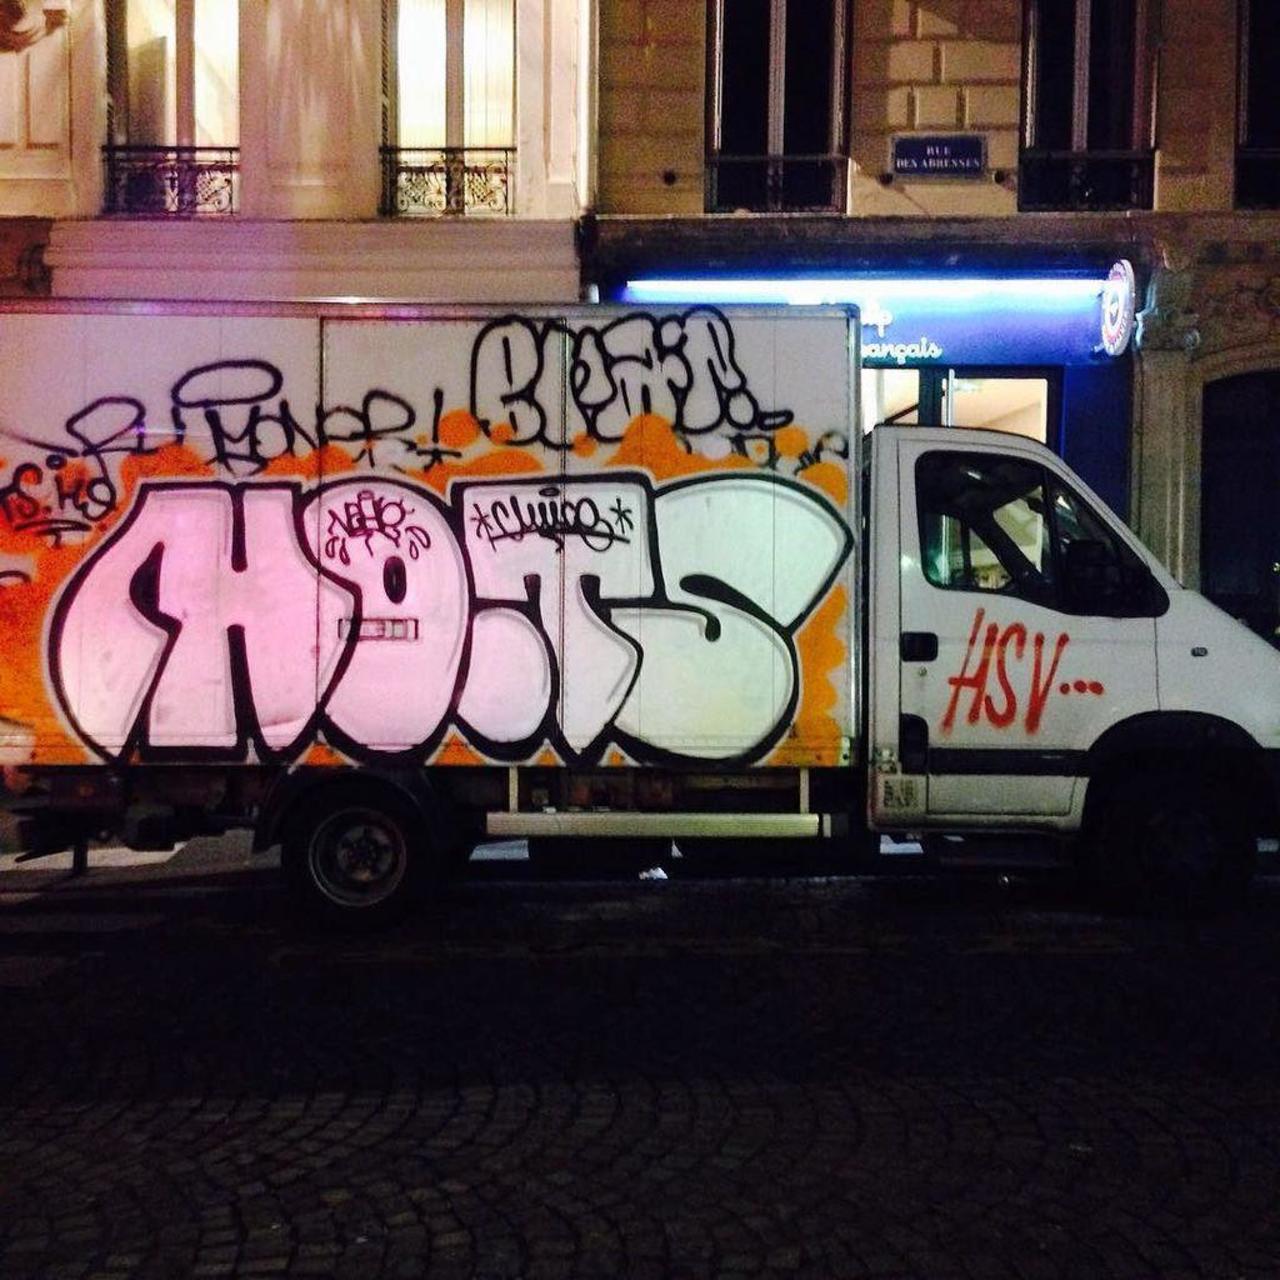 Graf-on-wheels... at night !
#paris #paris18eme #parisbynight #streetart #streetartparis #graffiti #grafittiart by … http://t.co/vUuyyc0Zah